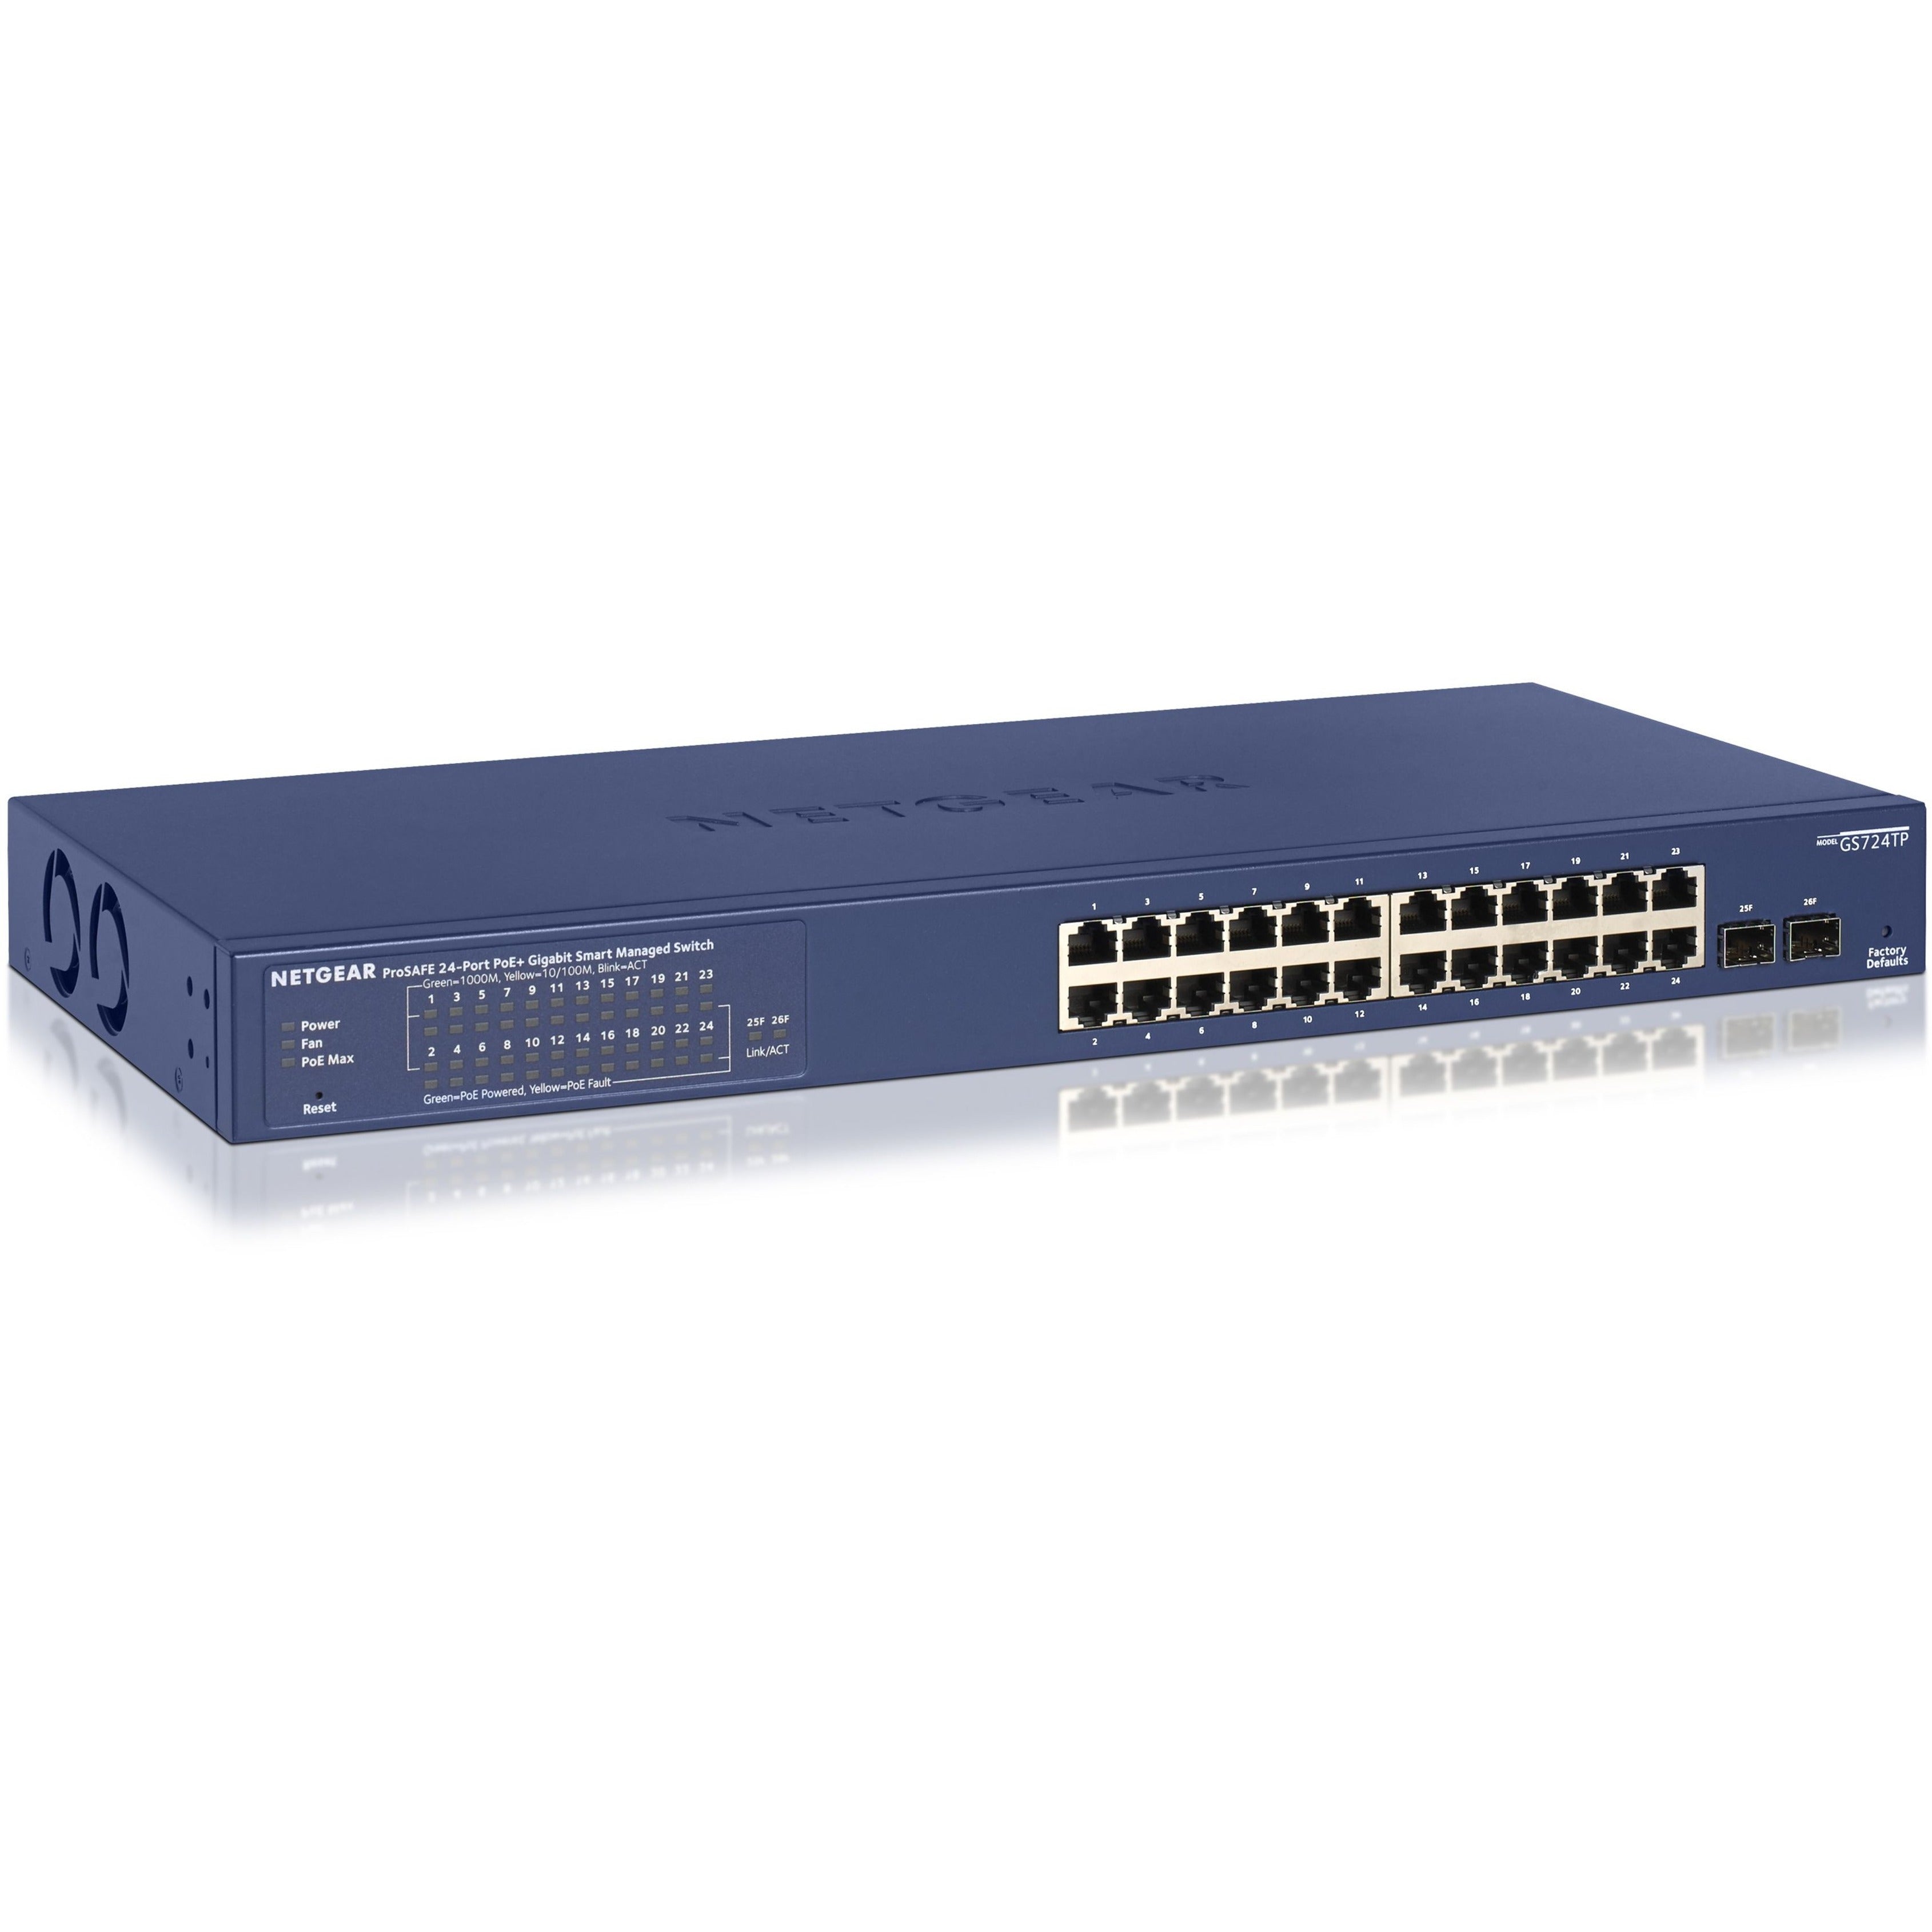 Netgear 24-Port Gigabit PoE+ Ethernet Smart Managed Pro Switch with 2 SFP Ports [Discontinued]